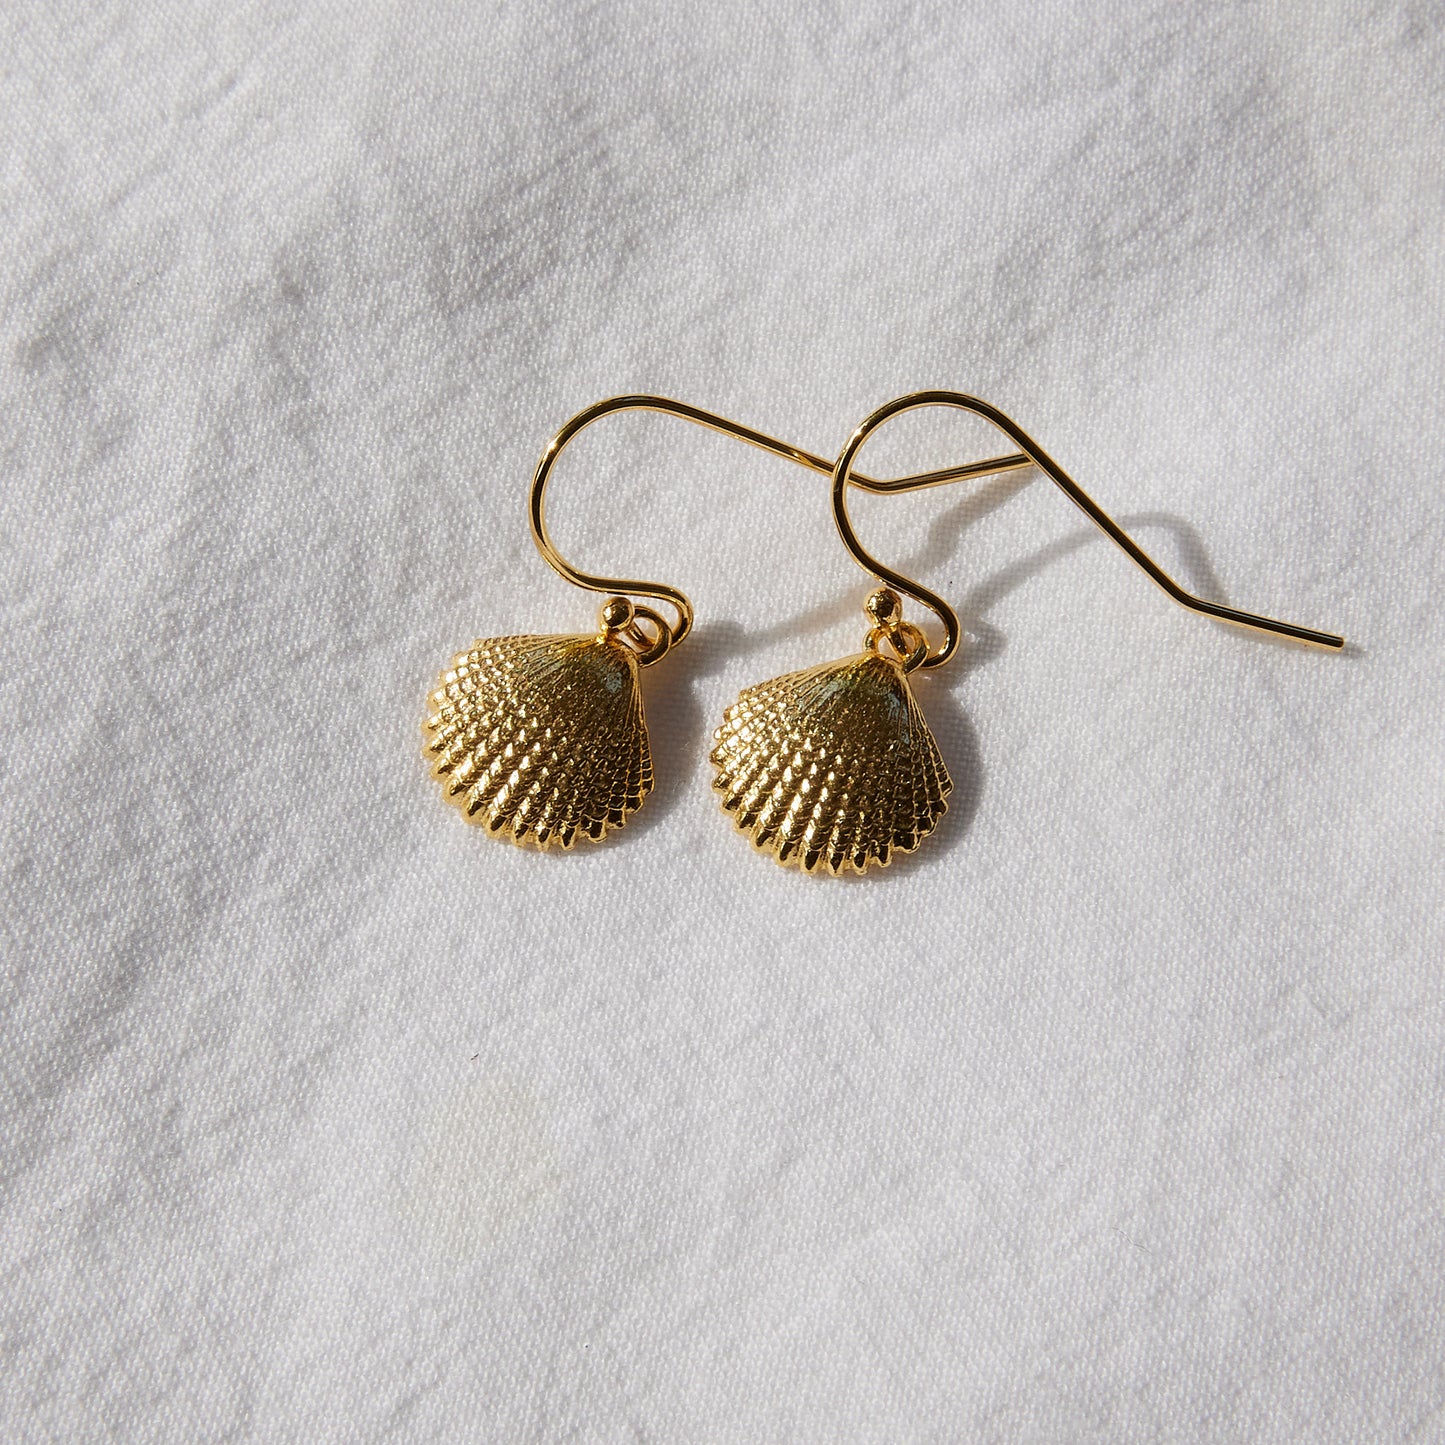 Seashell Hook Earrings 24k gold plated sterling silver